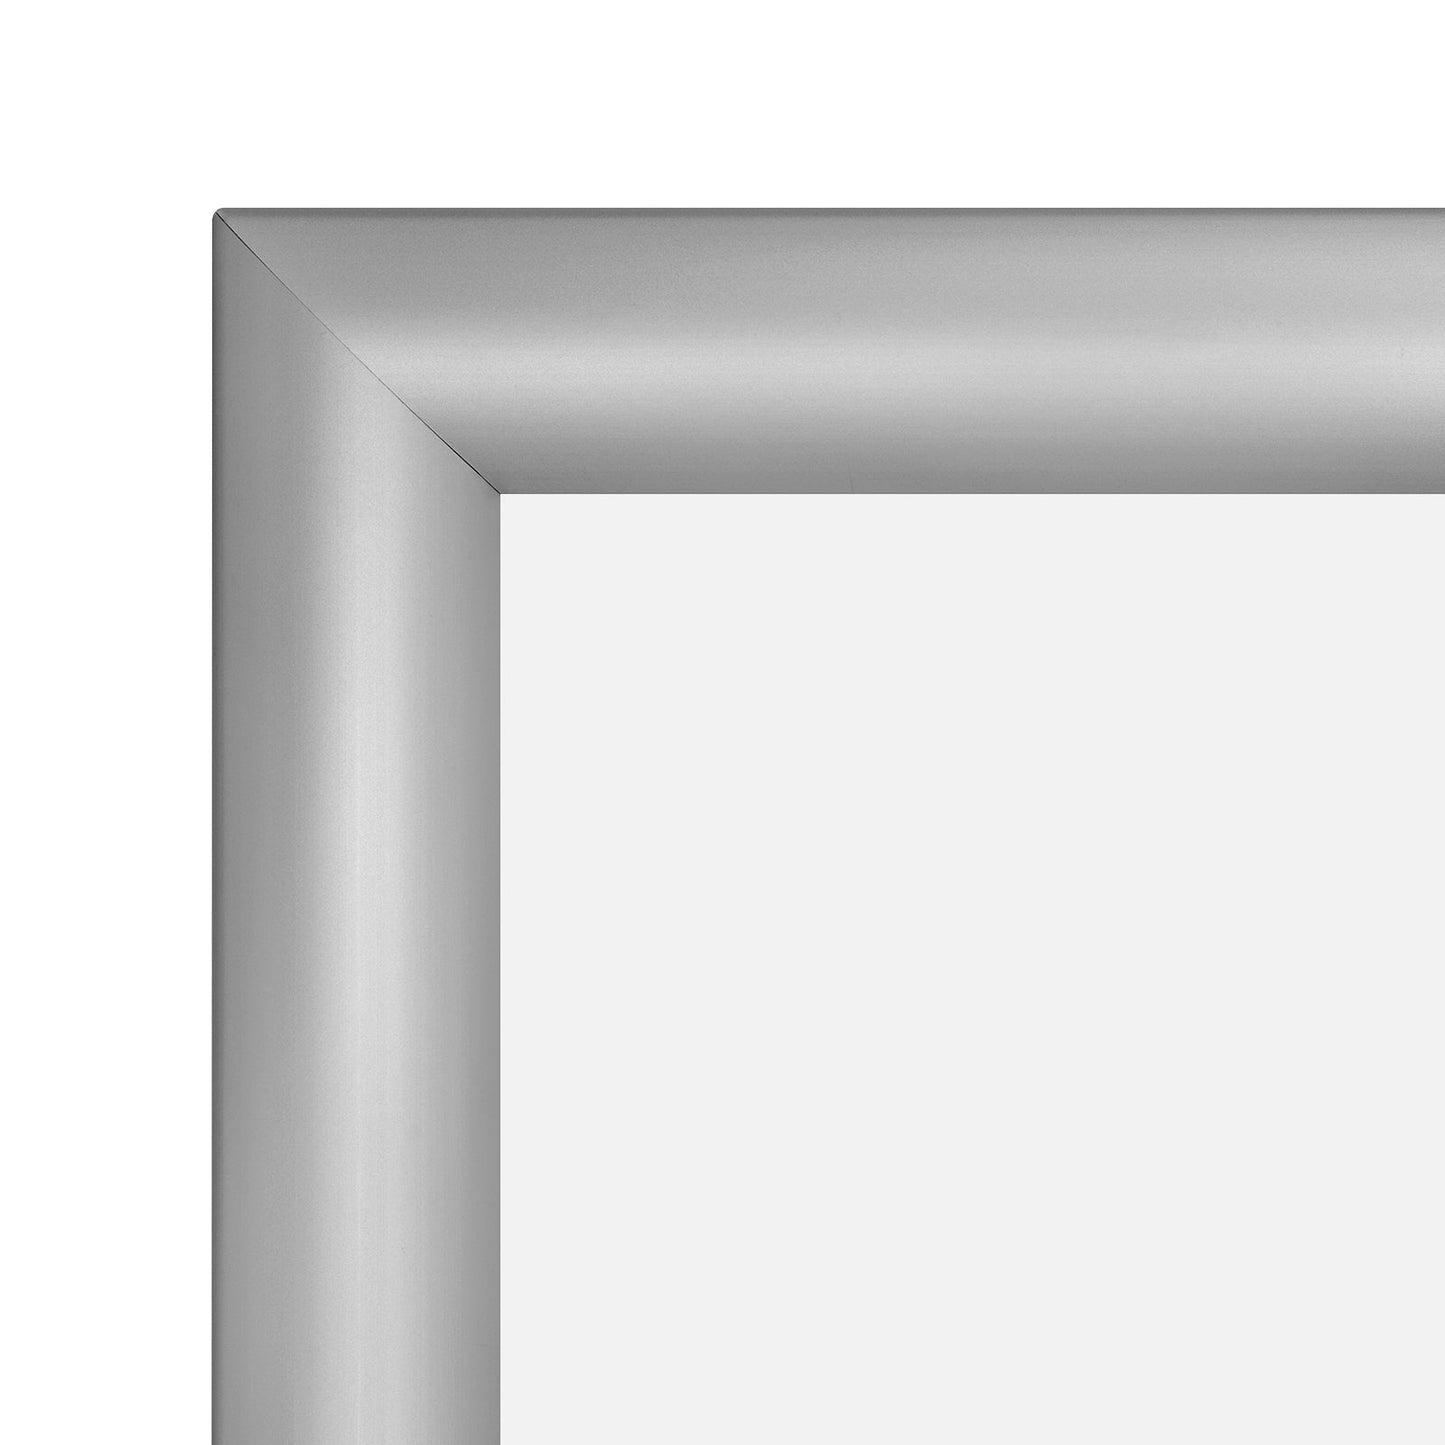 20x28 Silver SnapeZo® Snap Frame - 1.2" Profile